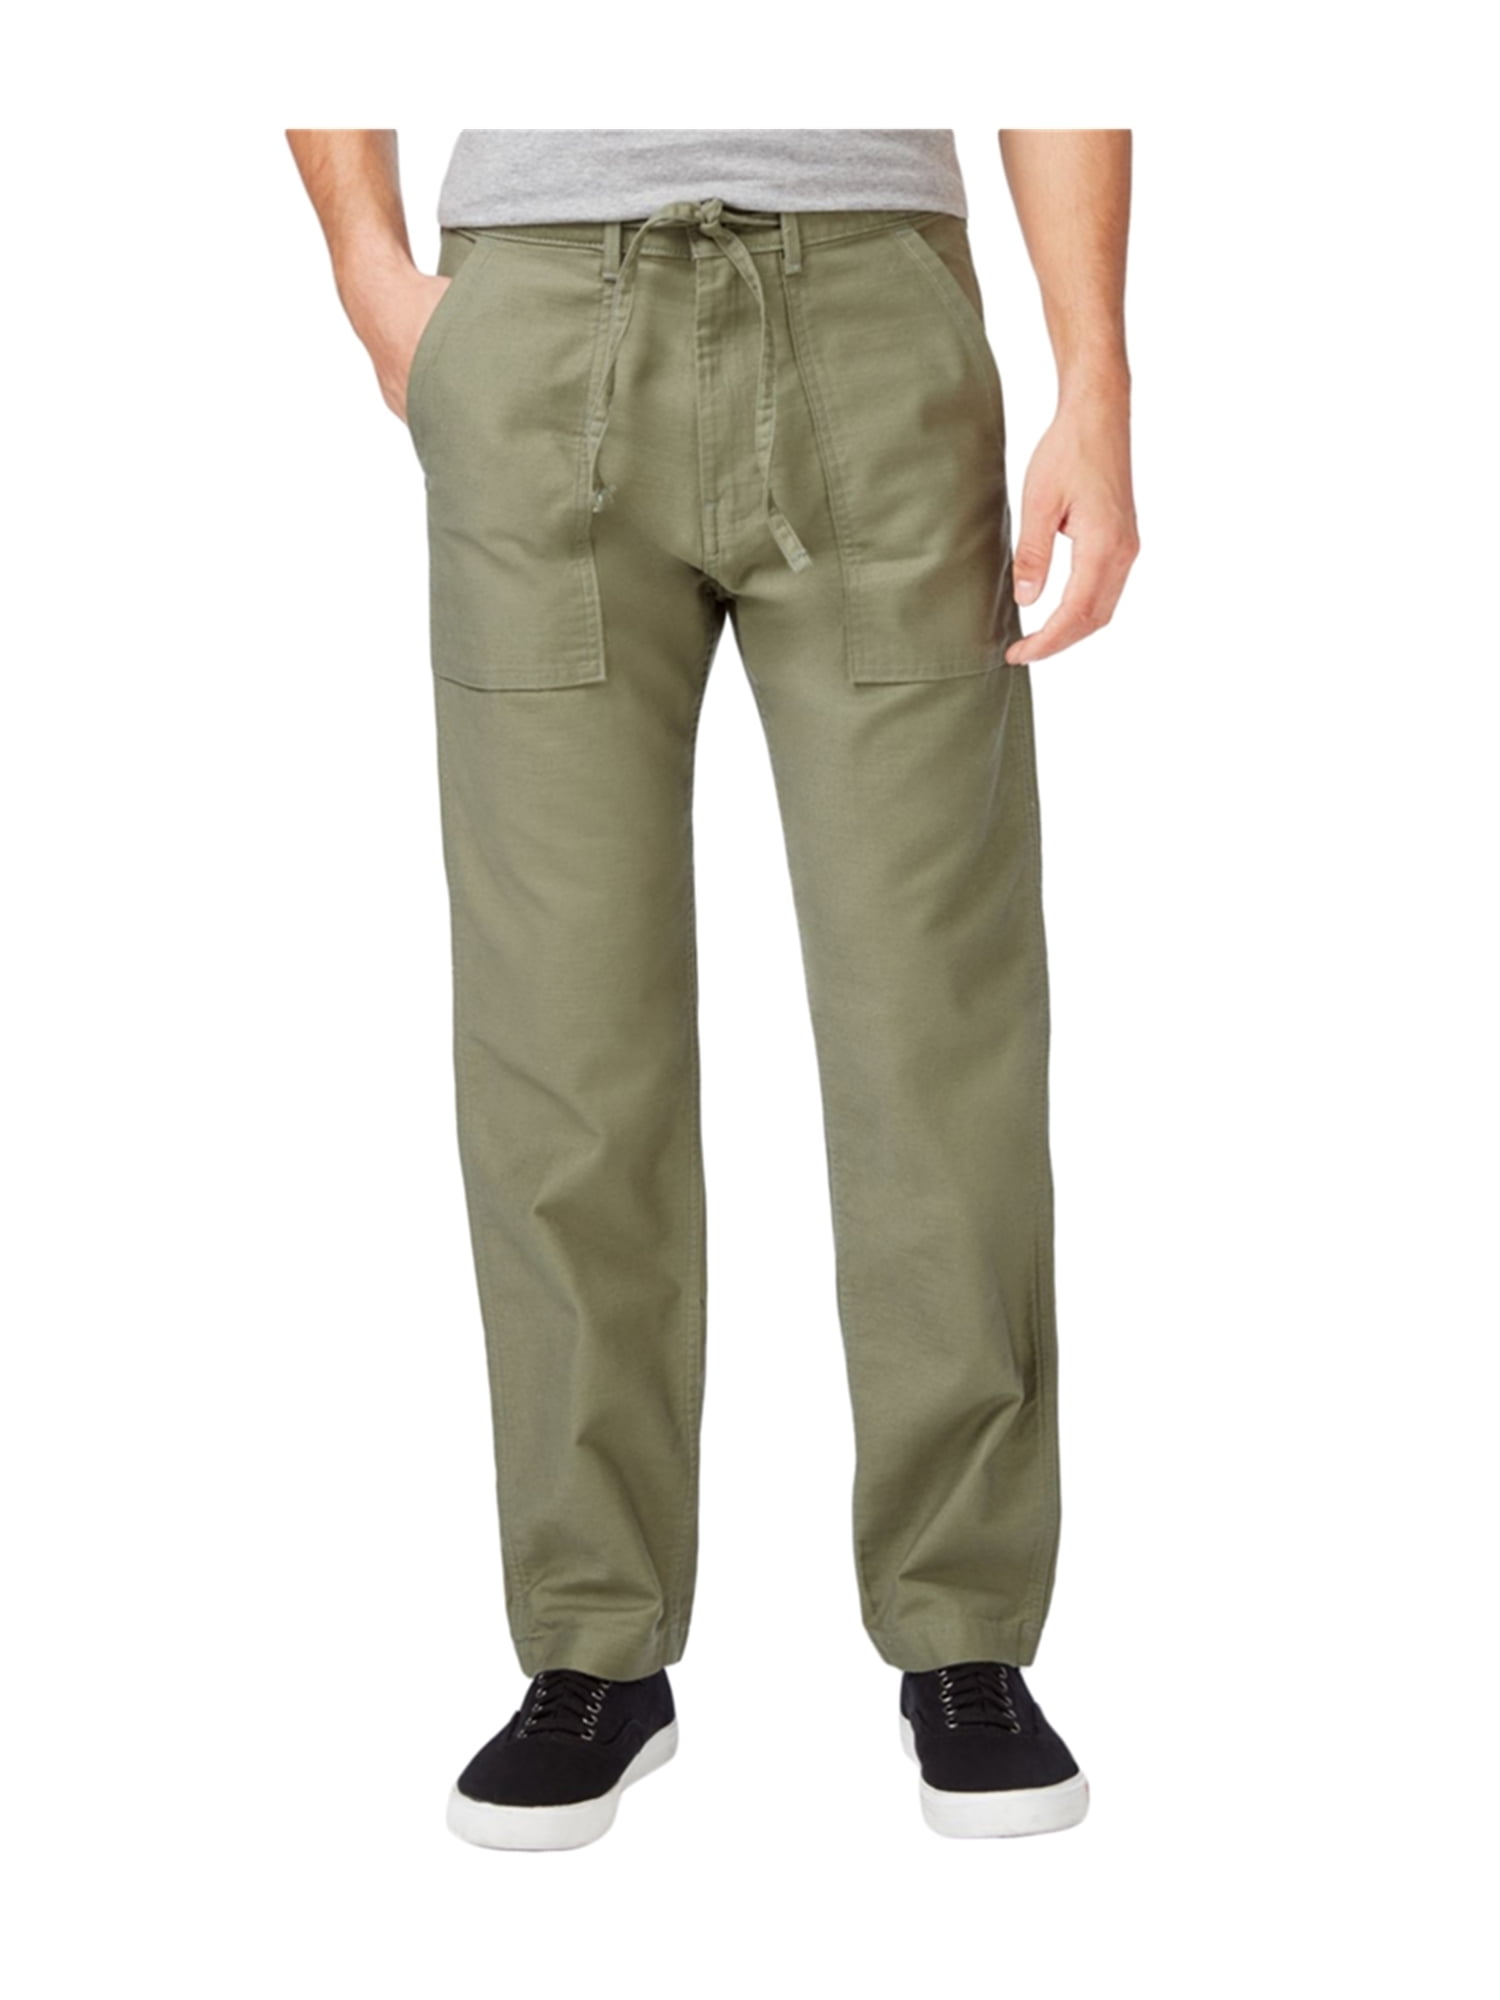 Levi's Mens Battalion Casual Trousers green 30x30 | Walmart Canada